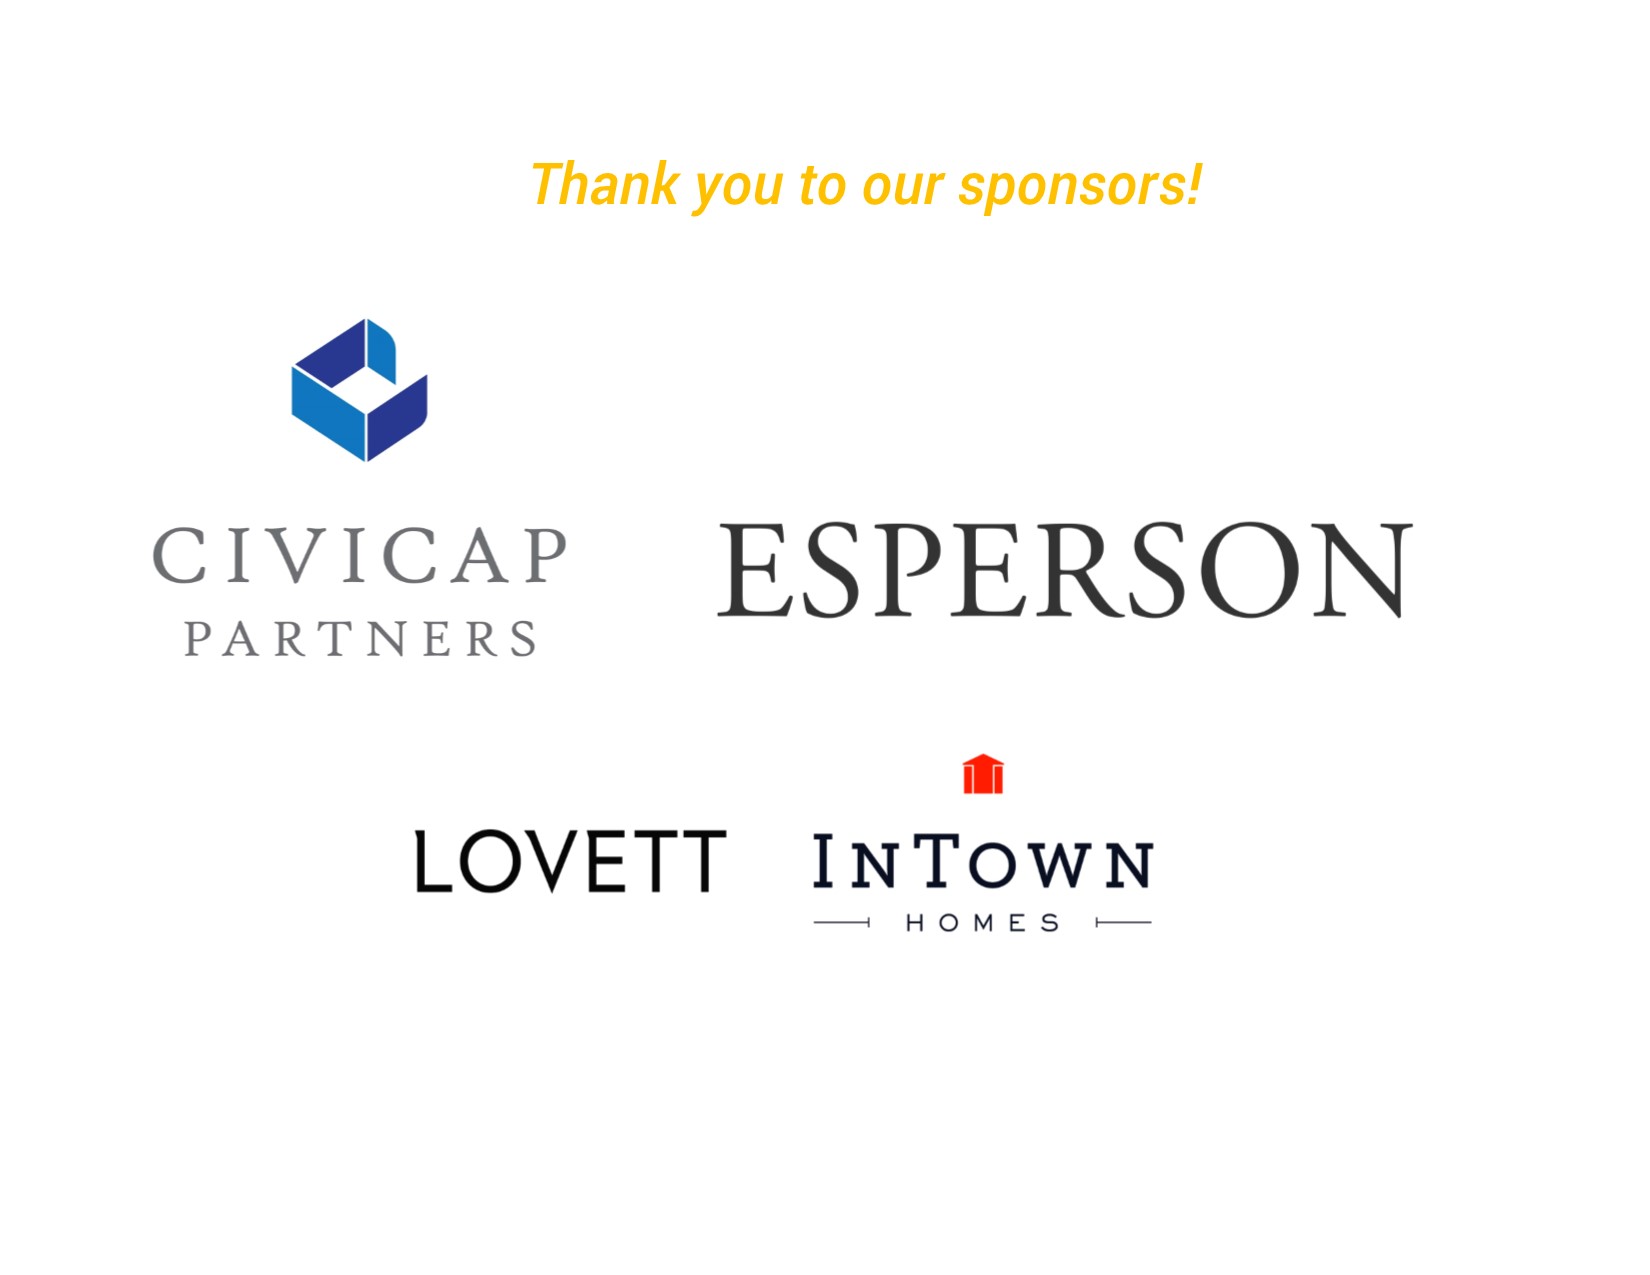 Sponsors logos: Civicap Partners, Esperson, Lovett, InTown Homes